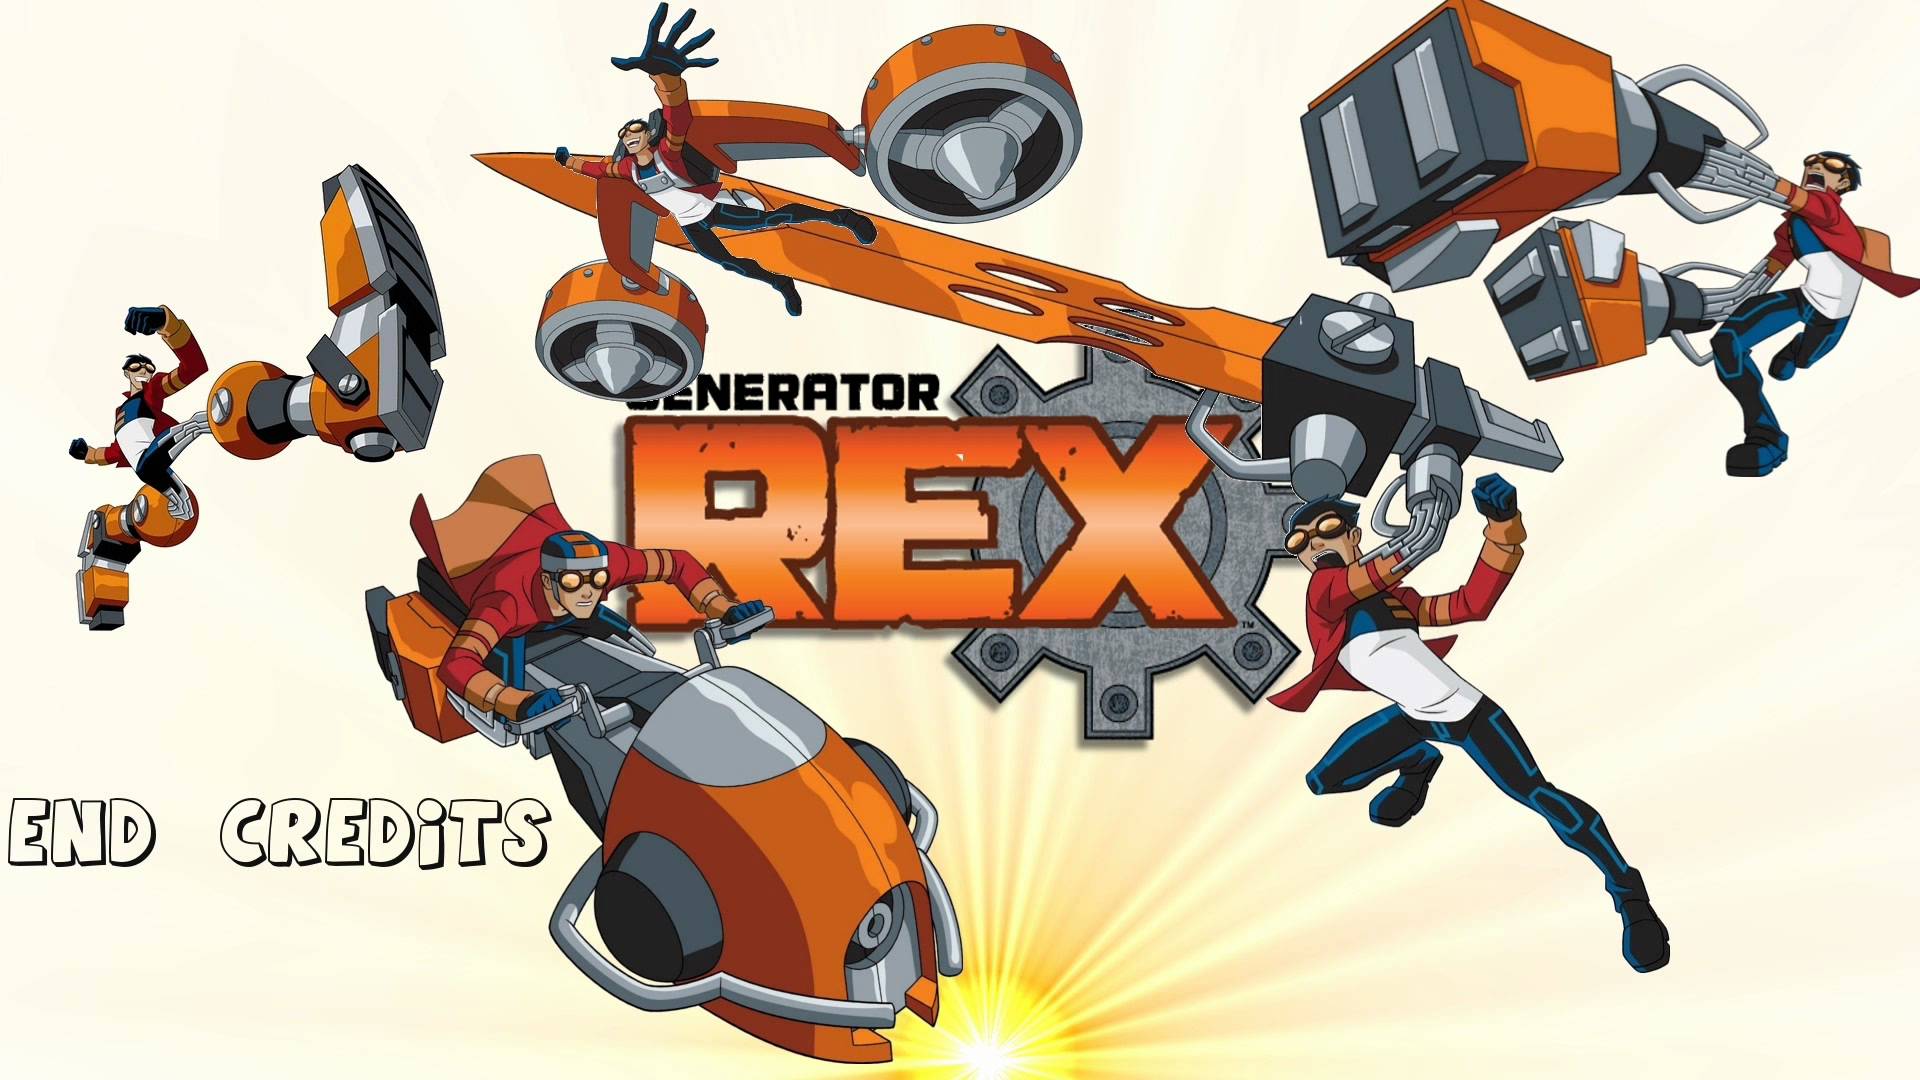 TV Show Generator Rex HD Wallpaper